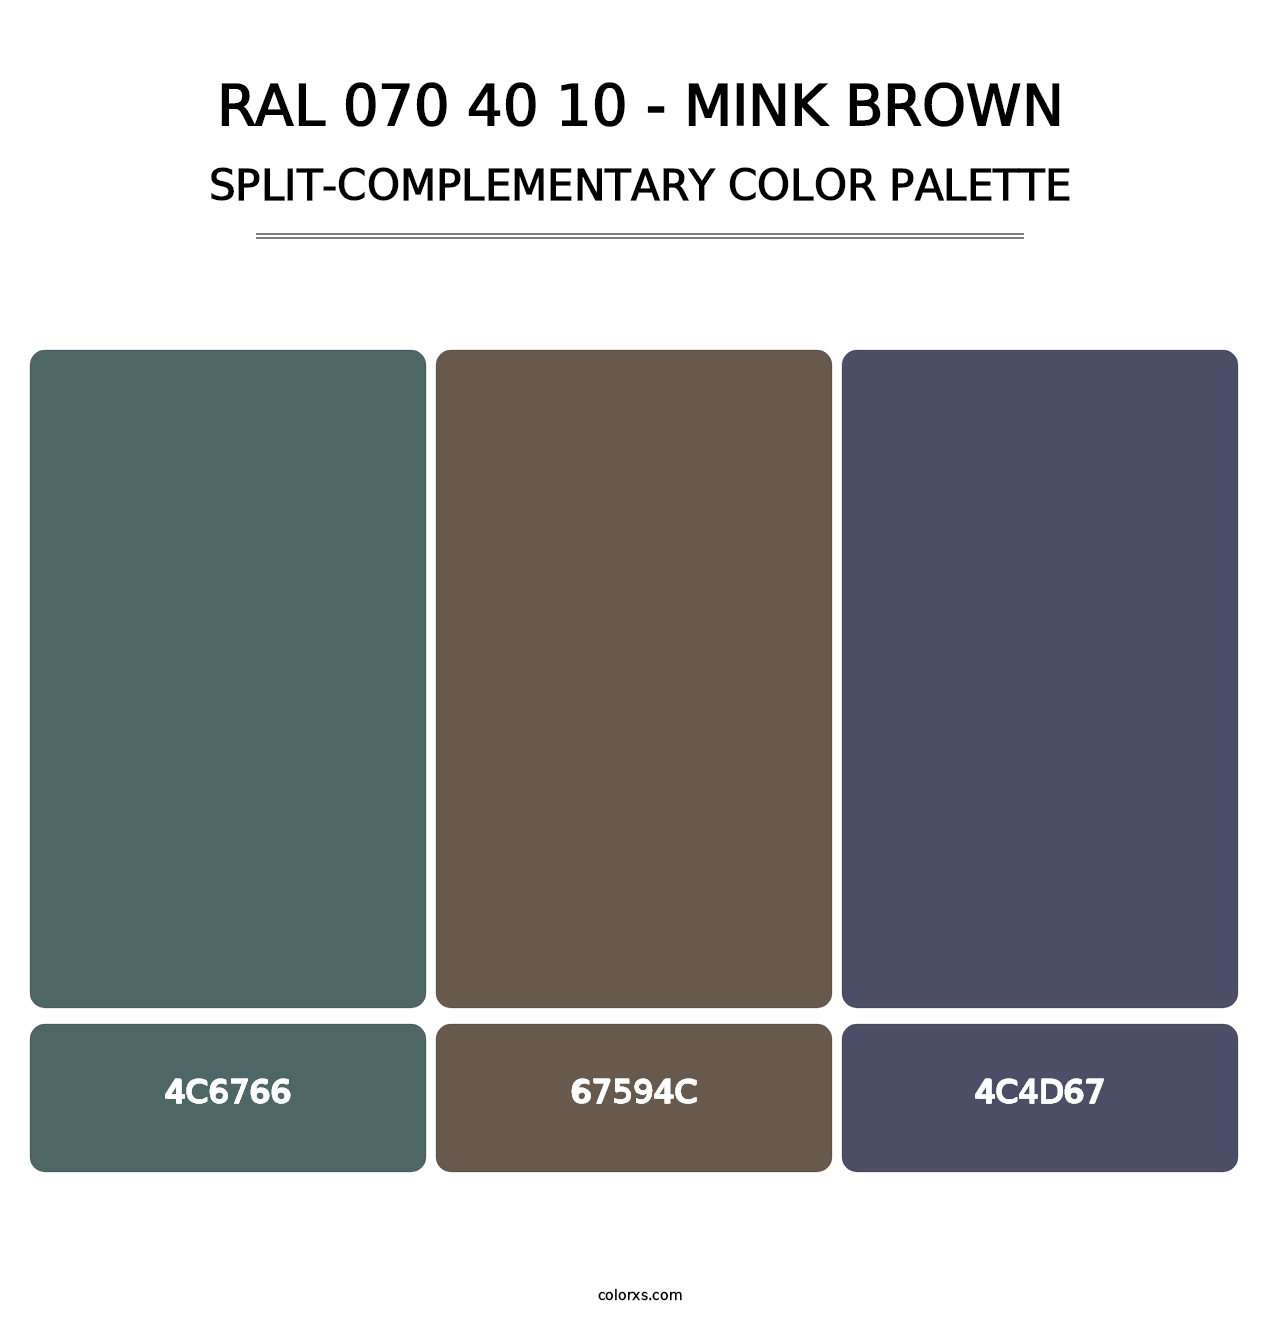 RAL 070 40 10 - Mink Brown - Split-Complementary Color Palette